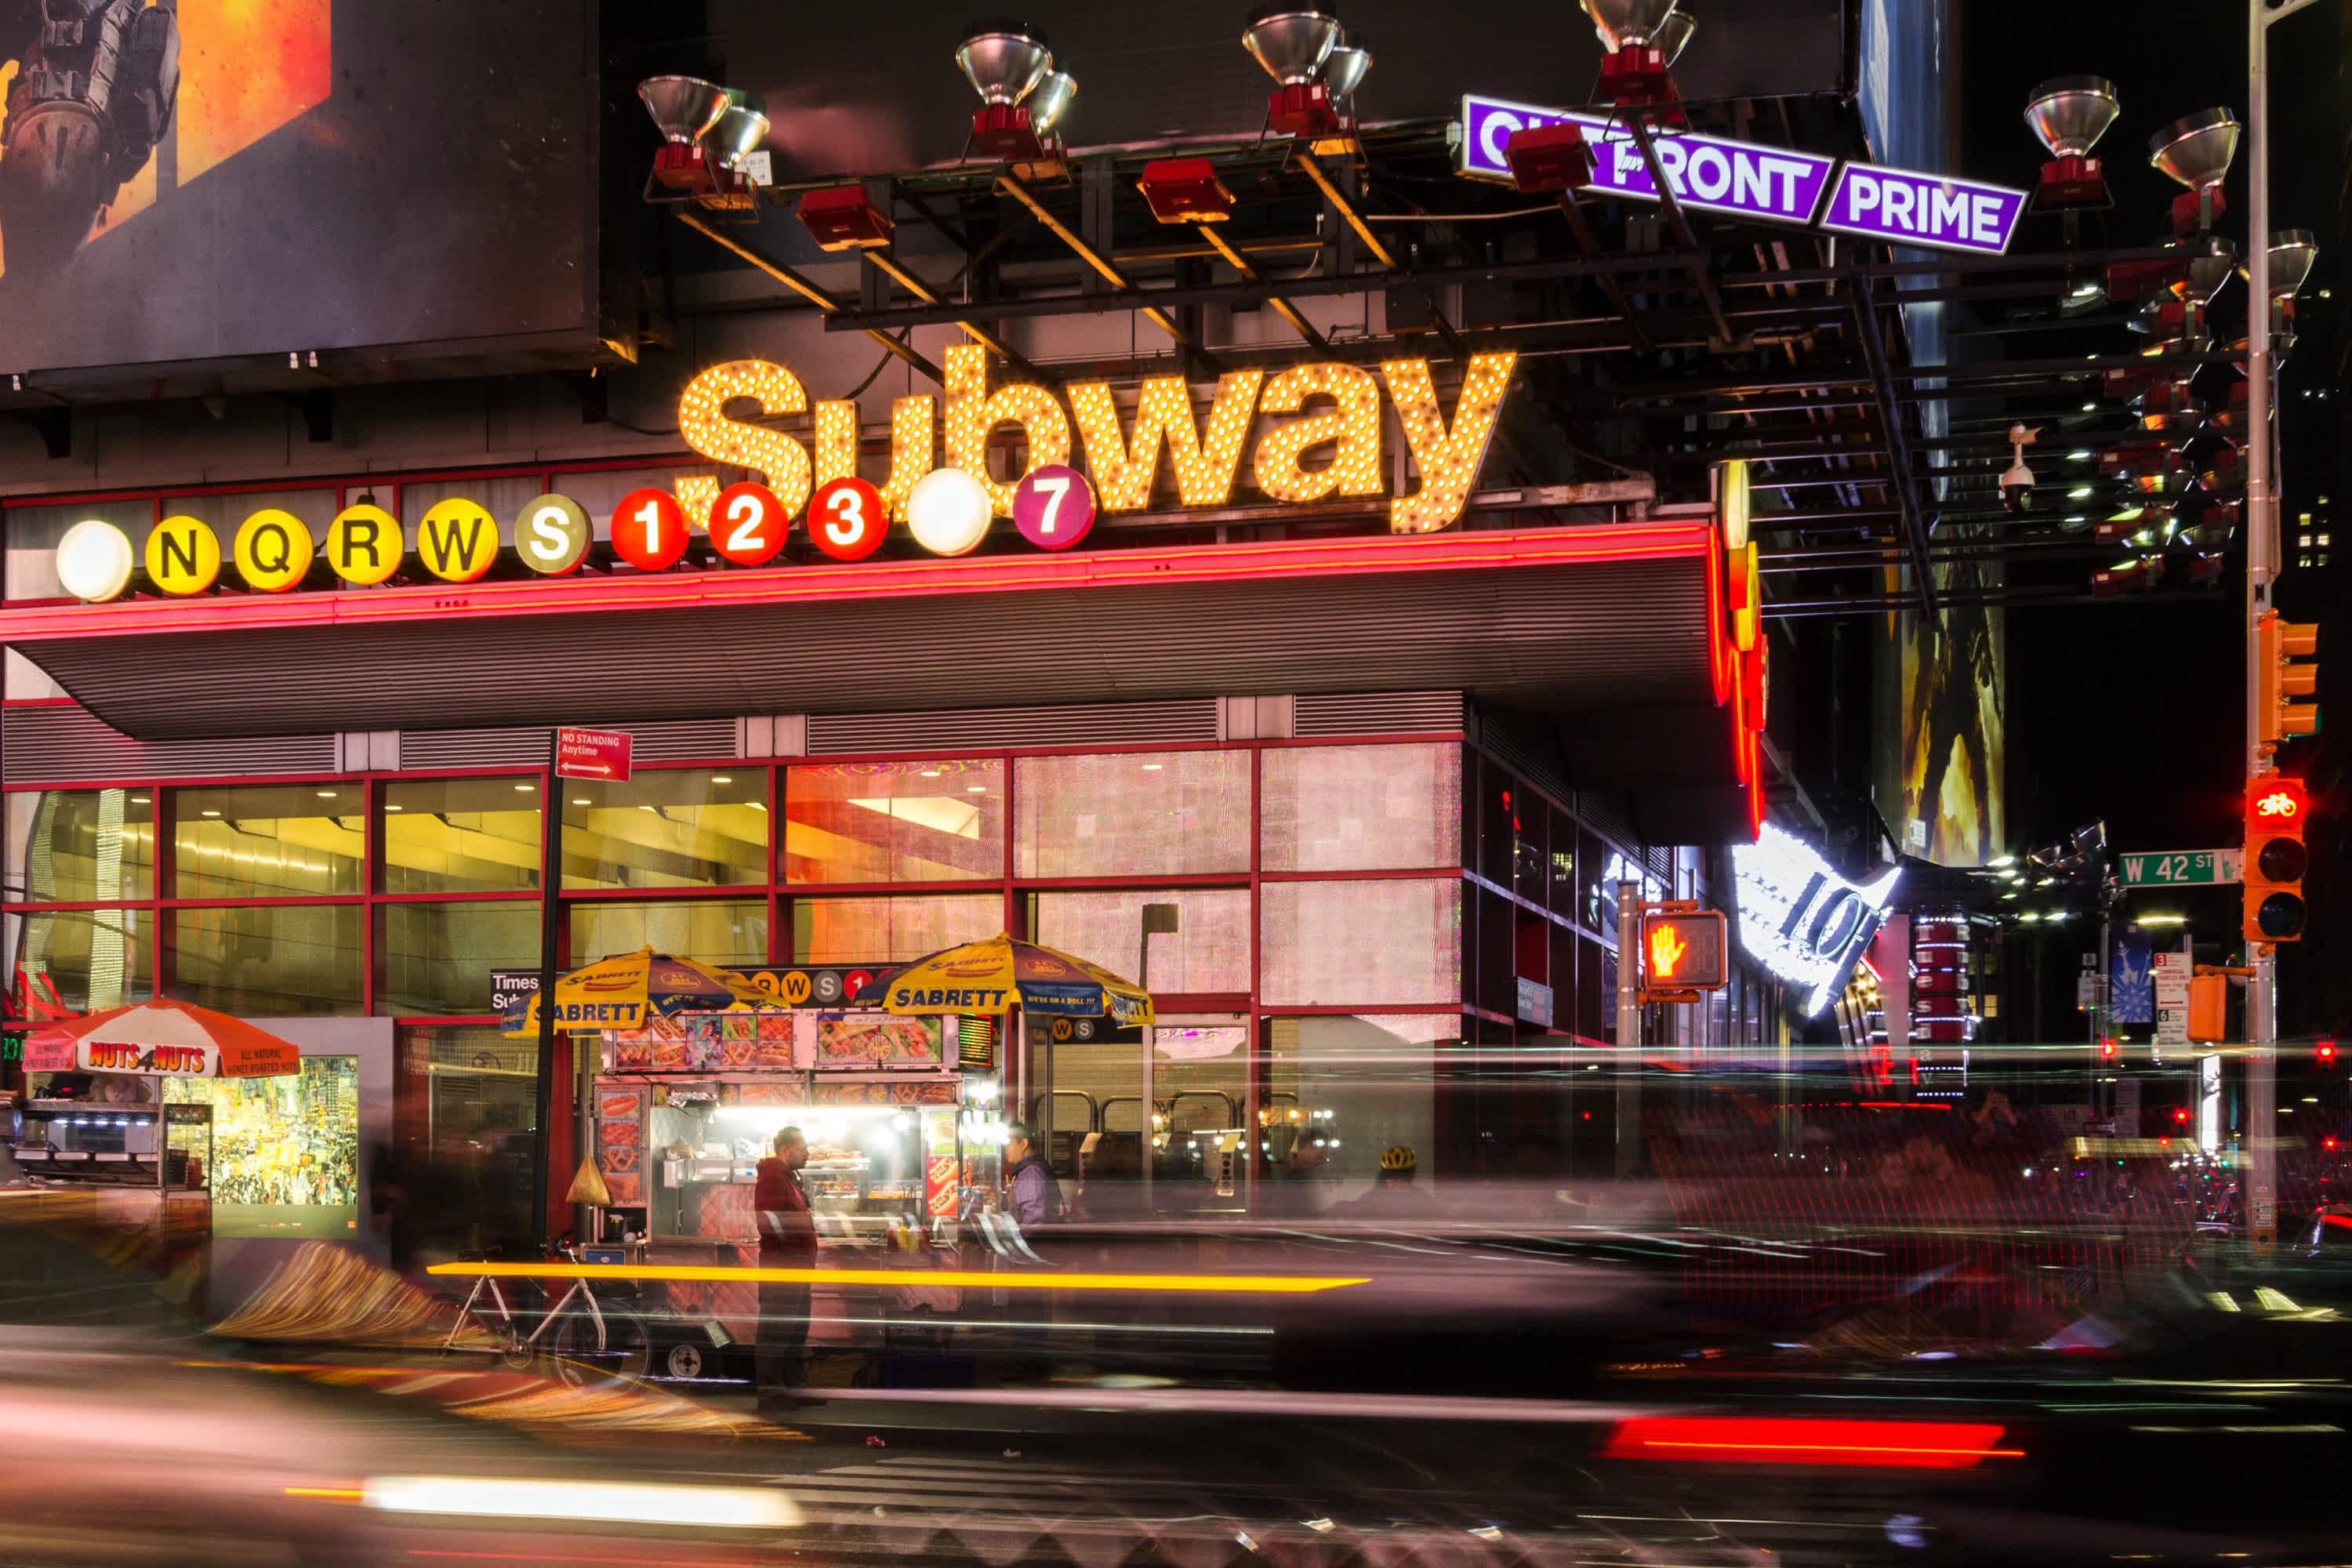 42-St-Subway-Times-Square-Manhattan-NYC-photo-Matthew-Penrod